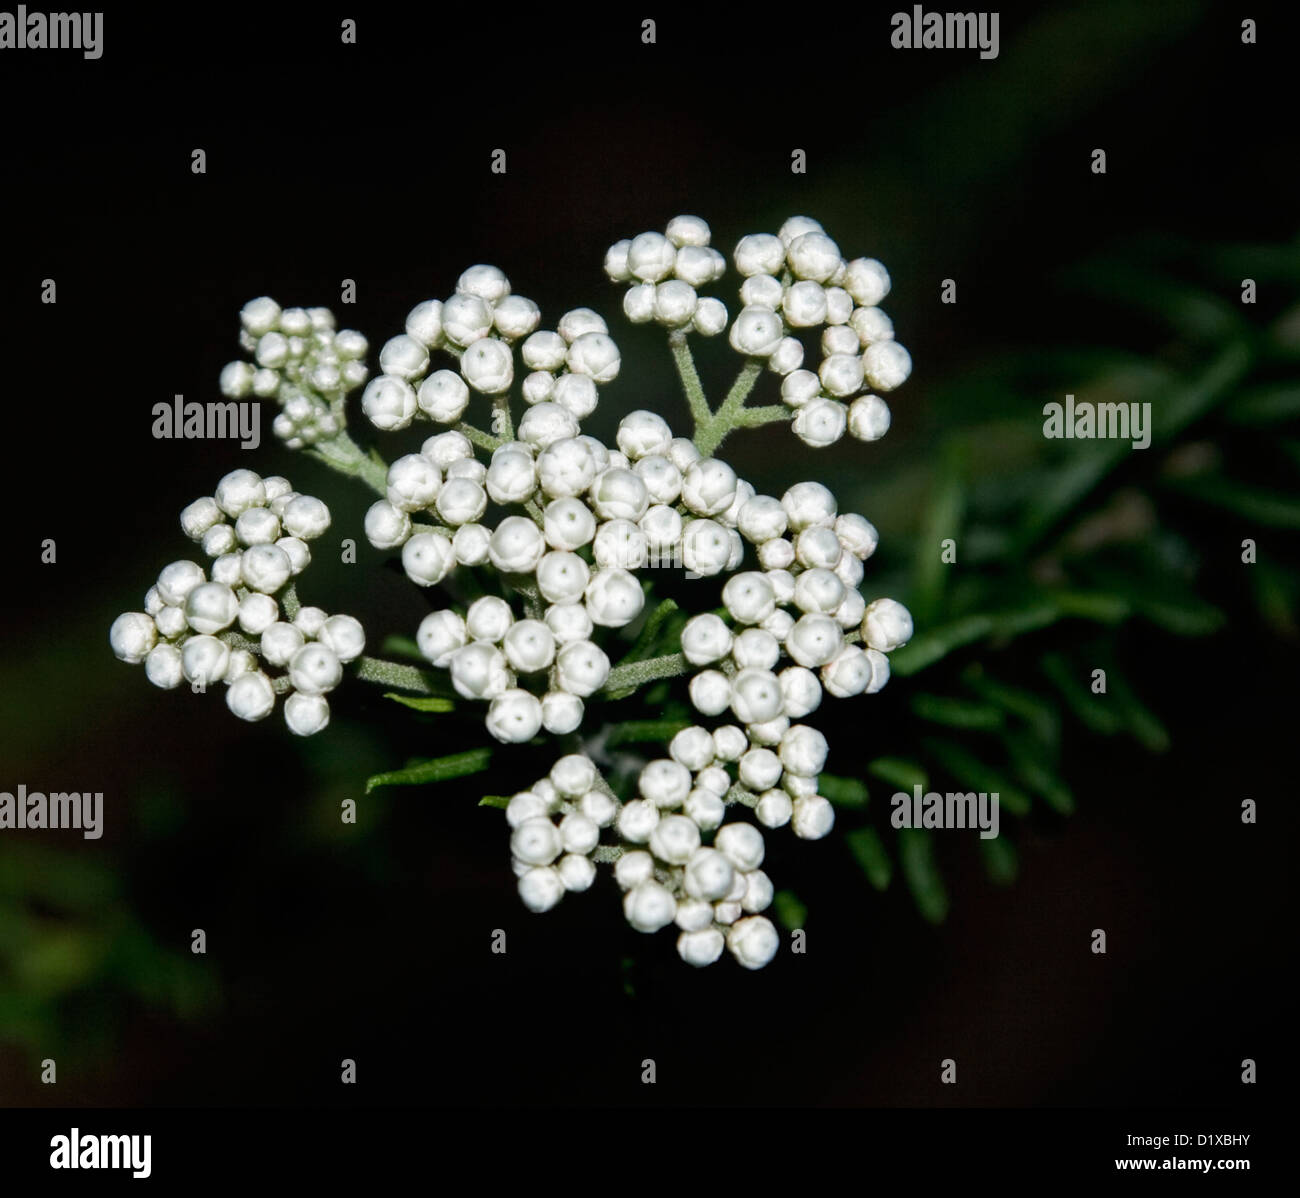 Cluster of white flowers of Ozothamnus diosmifolius - riceflowers - and foliage of Australian native plant on dark background Stock Photo